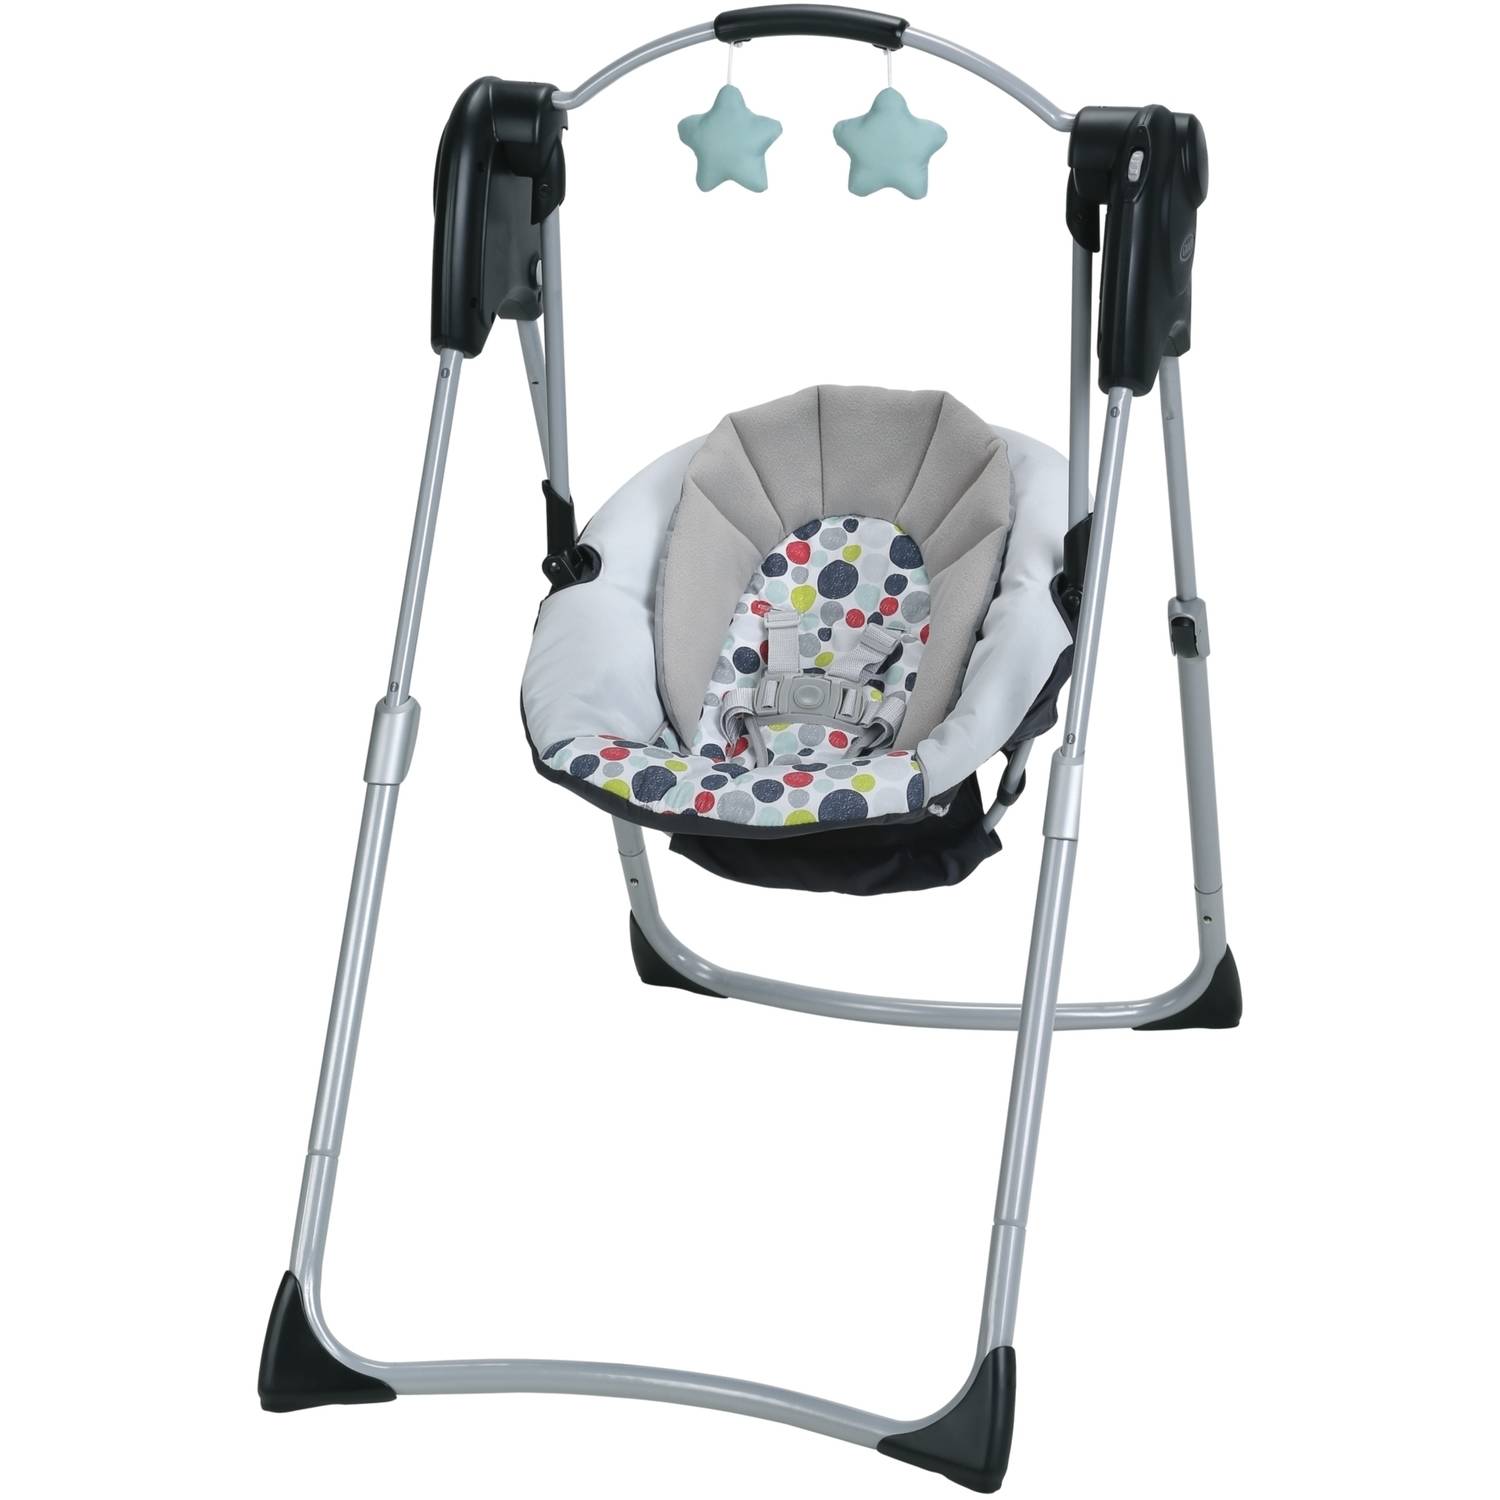 Graco Slim Spaces Compact Baby Swing, Etcher - Walmart.com